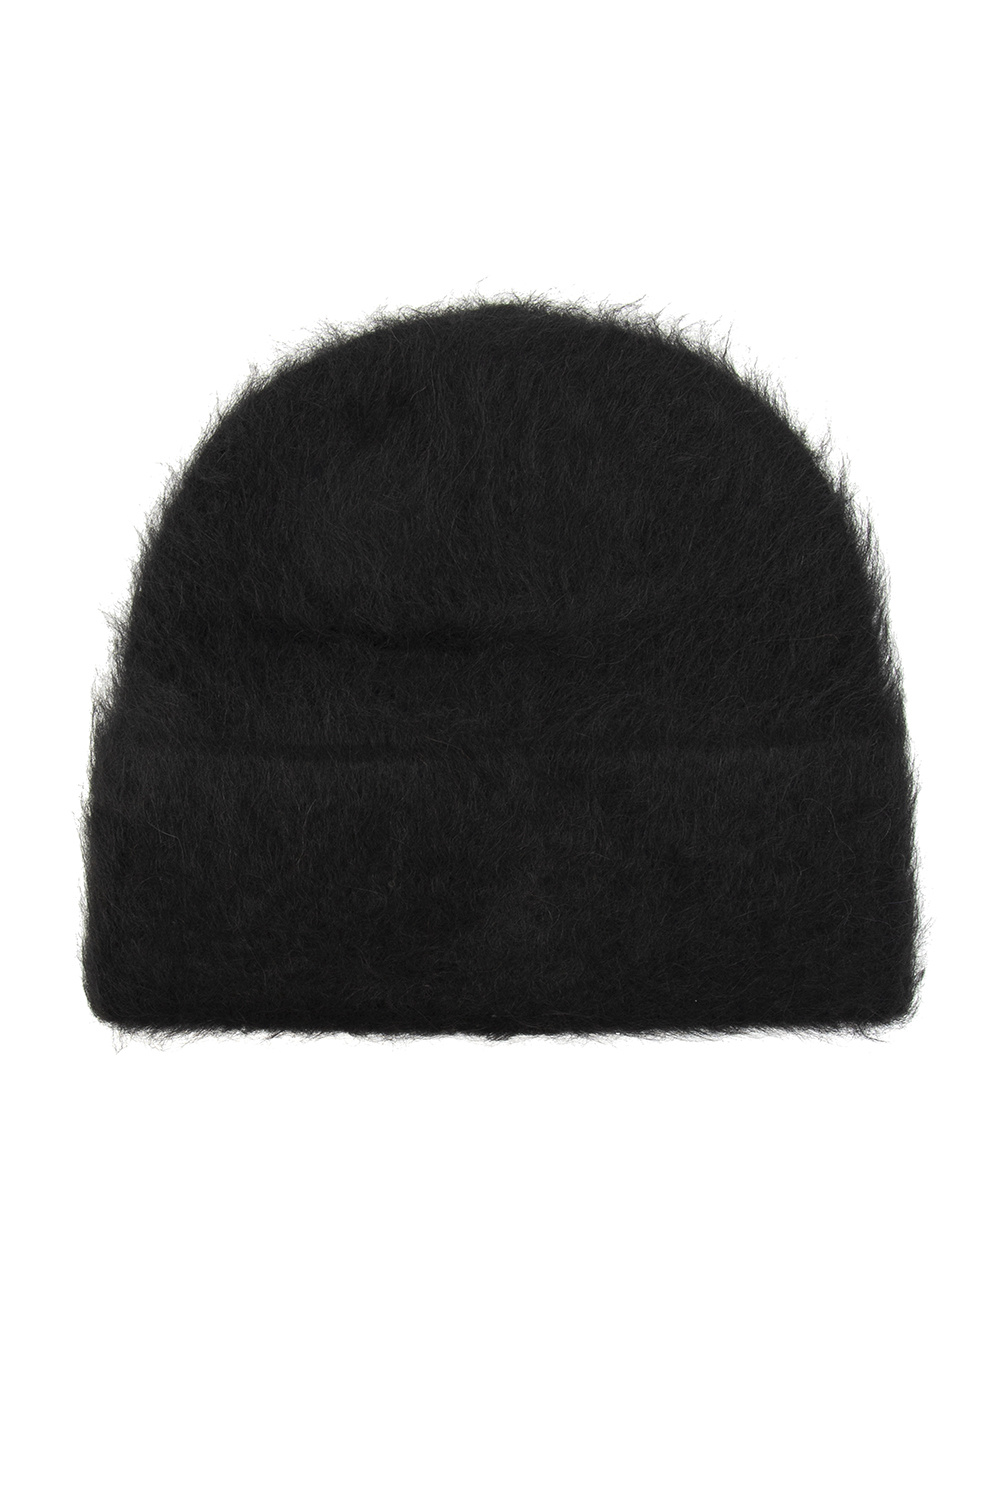 Toteme Fur hat